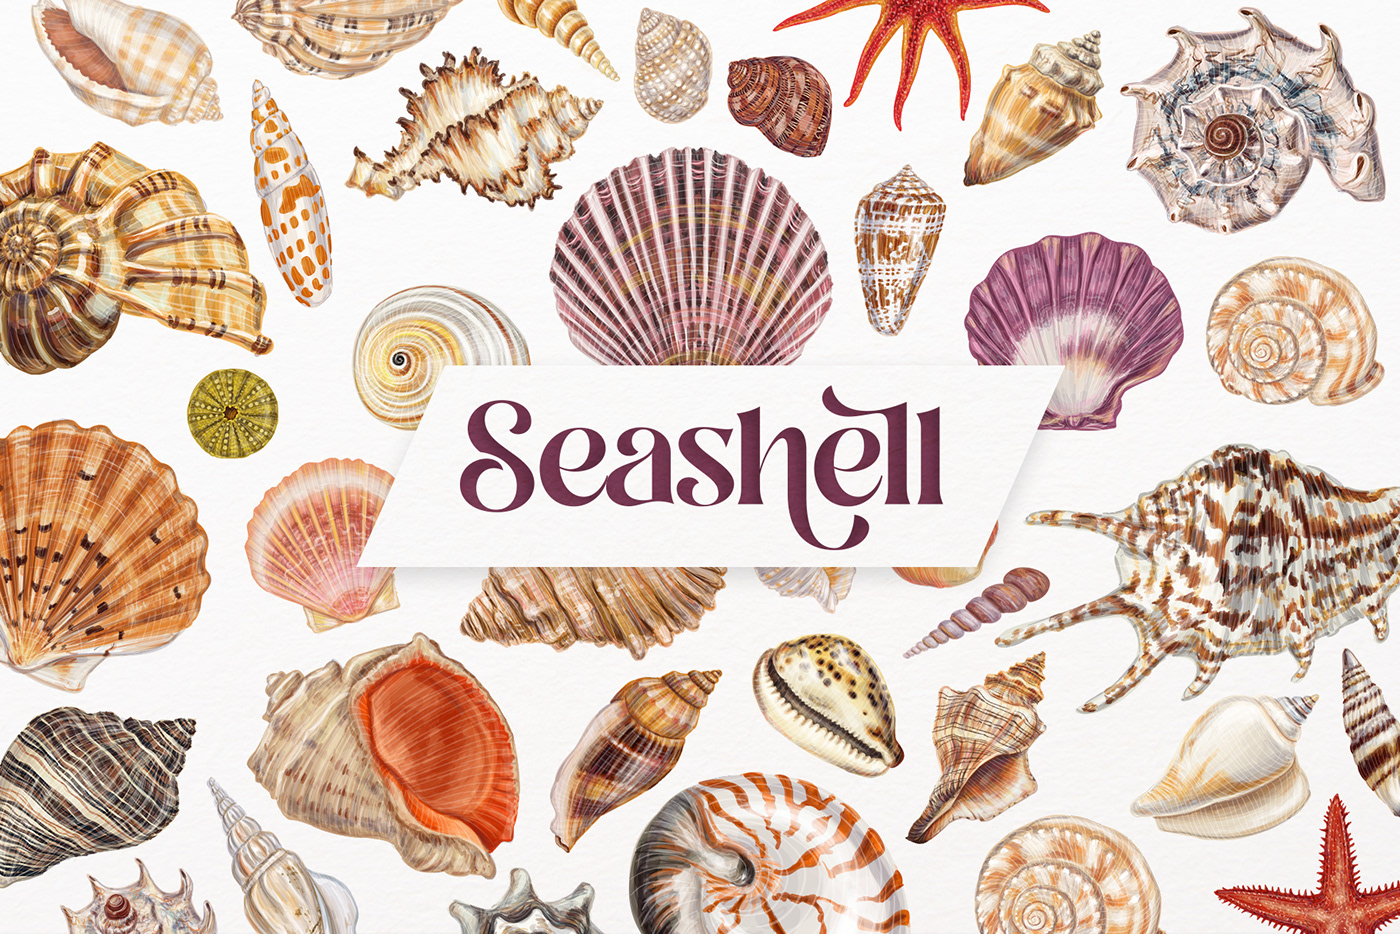 Beautiful watercolor style vector seashell illustrations, drawings, paintings.